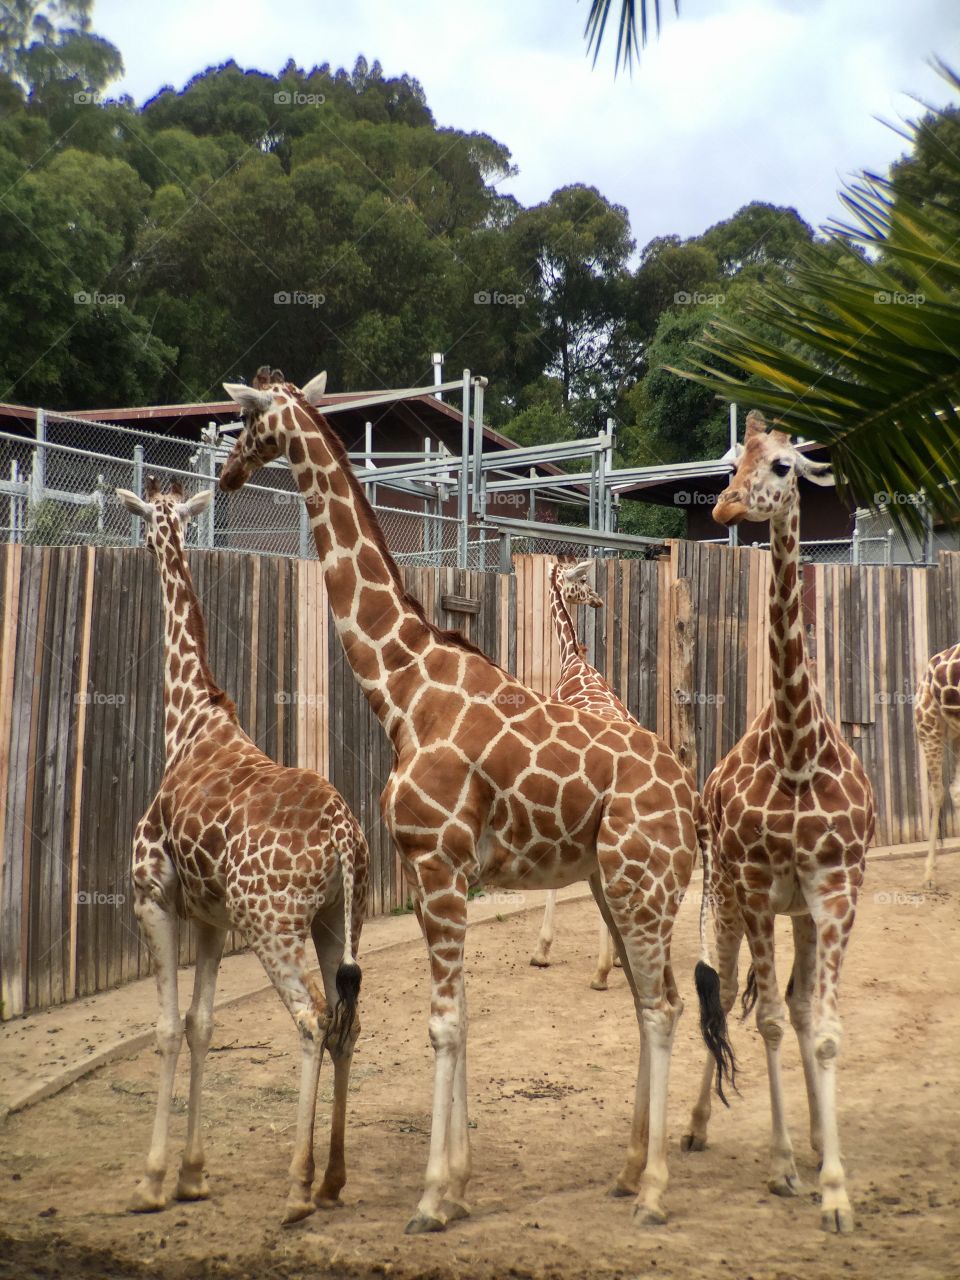 Giraffes at Zoo 